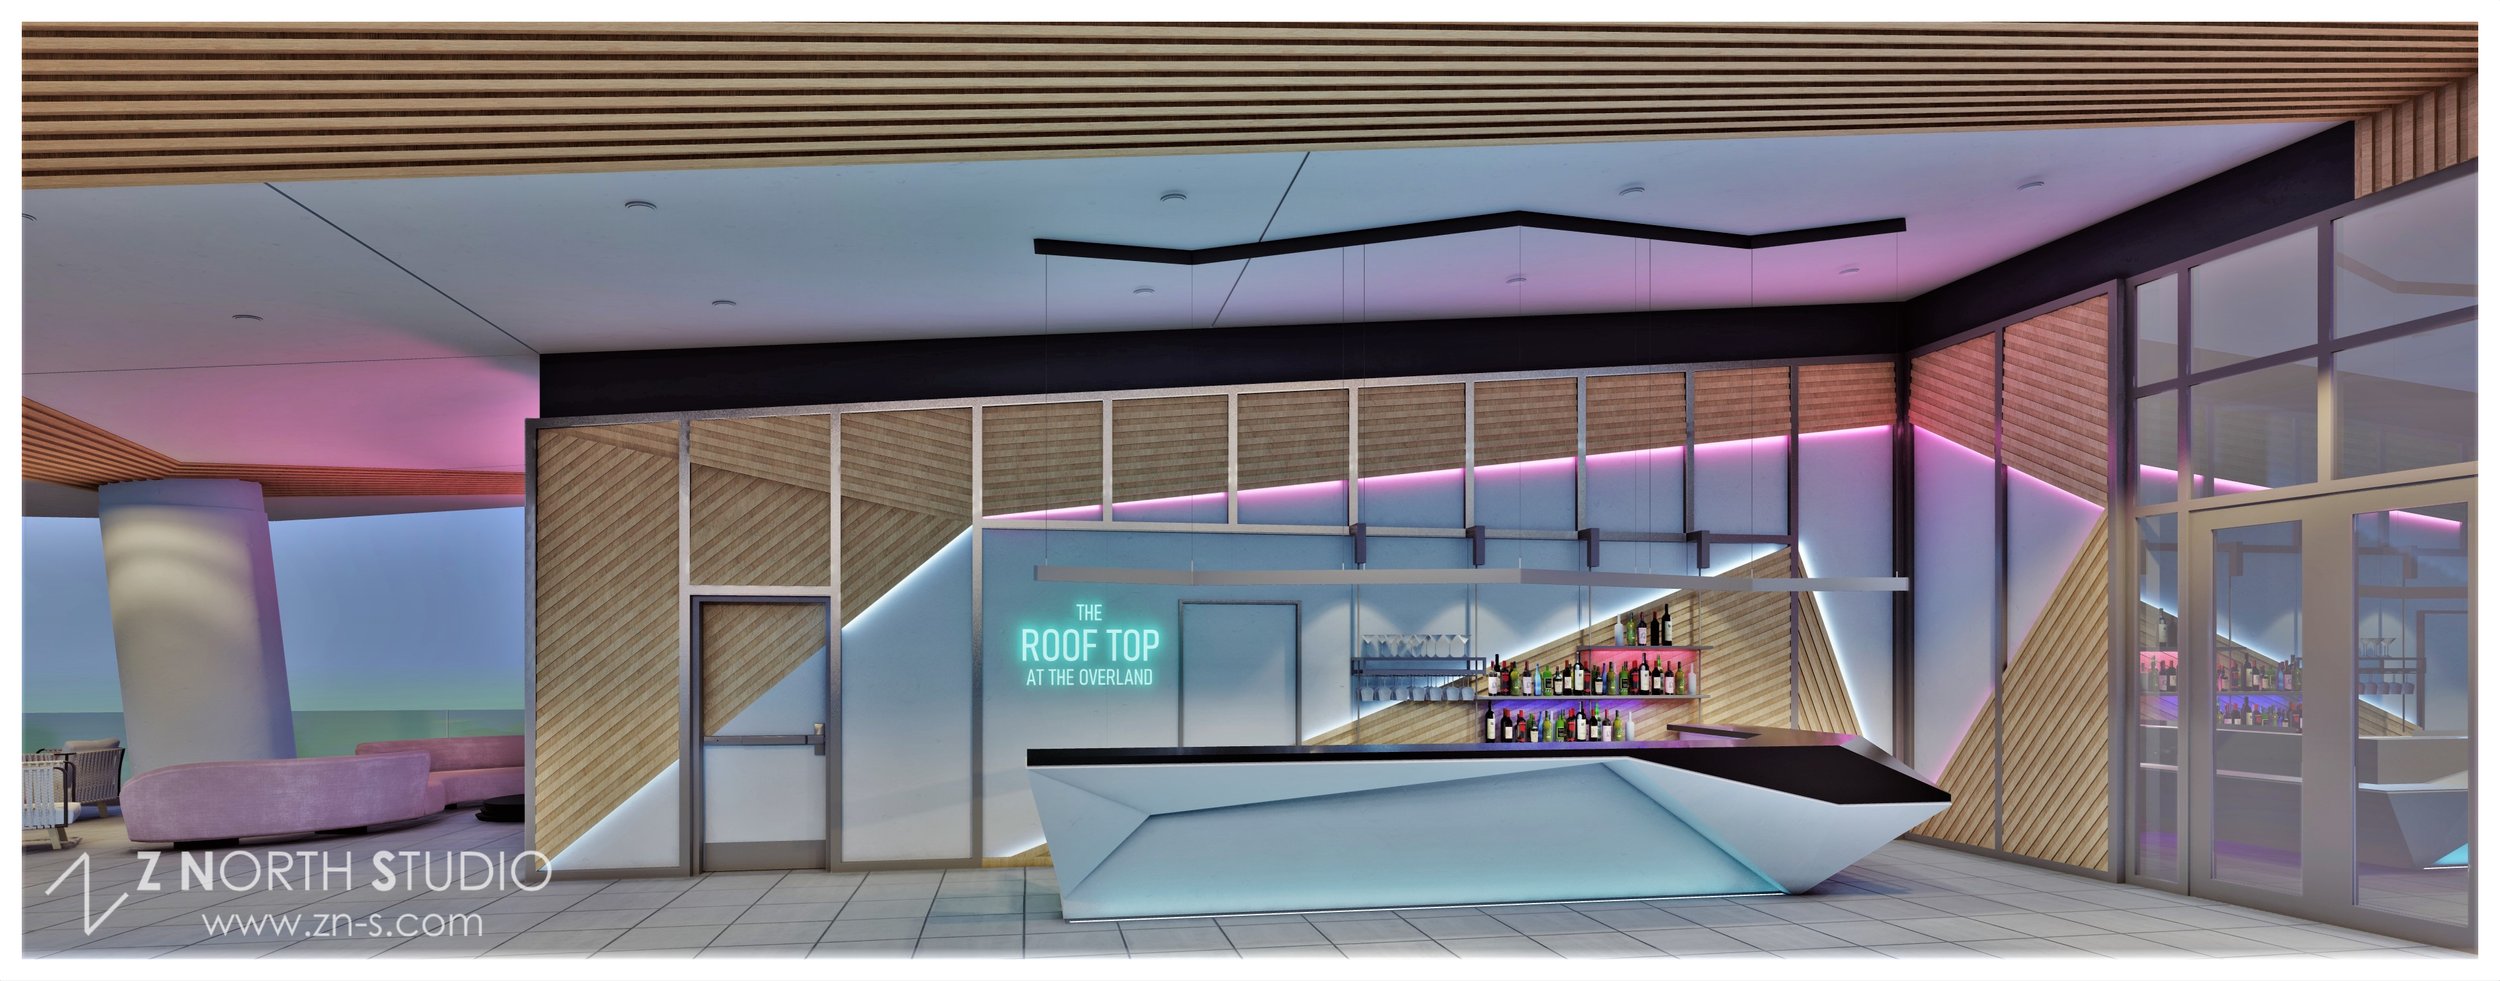 Kimpton Overland Hotel Rooftop & Interior Design Z North Studio (3).jpg